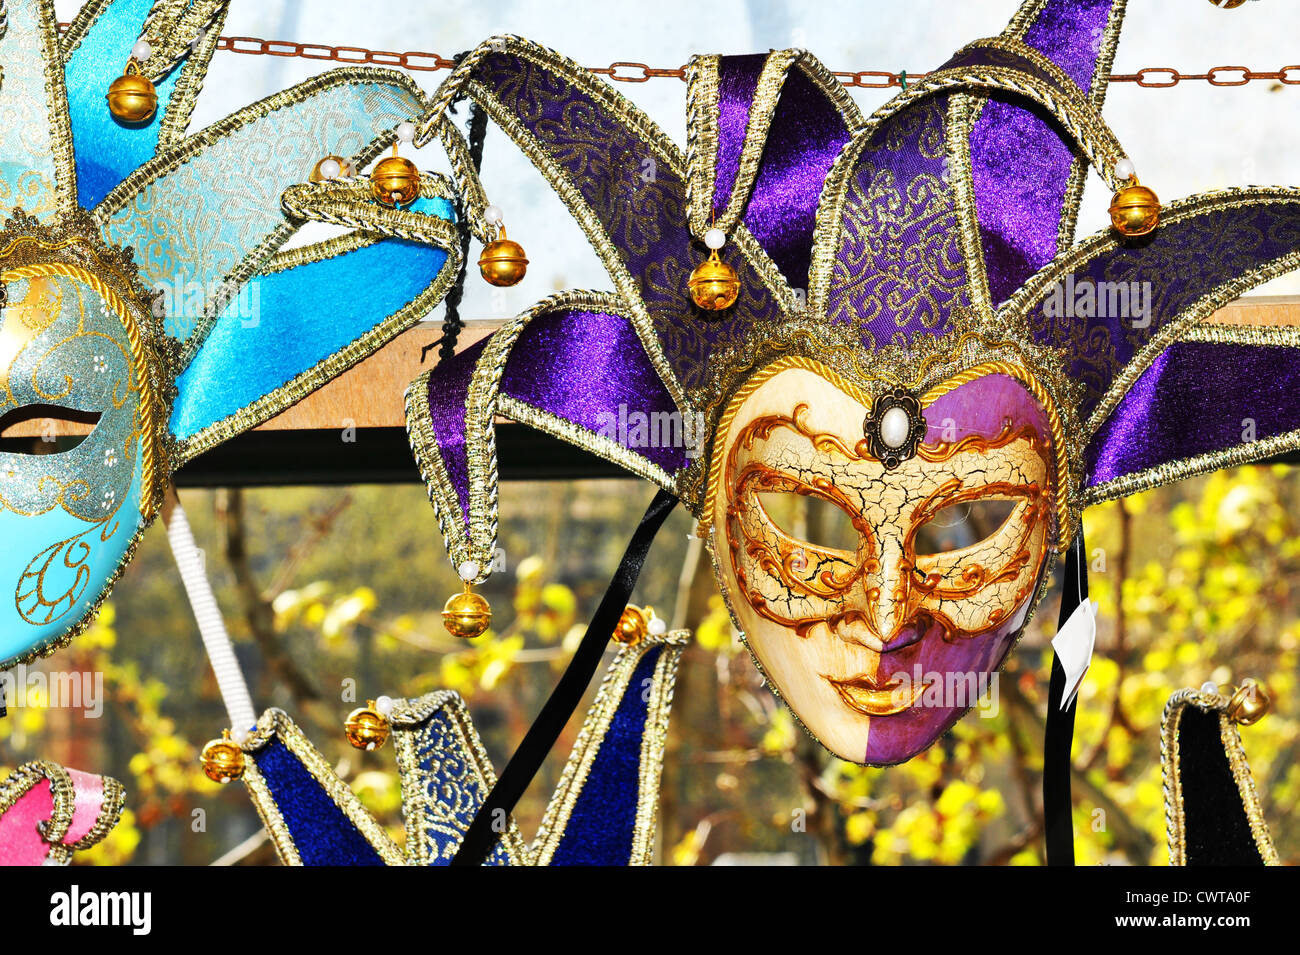 Close up of colorful Venetian masks in souvenir shop Stock Photo